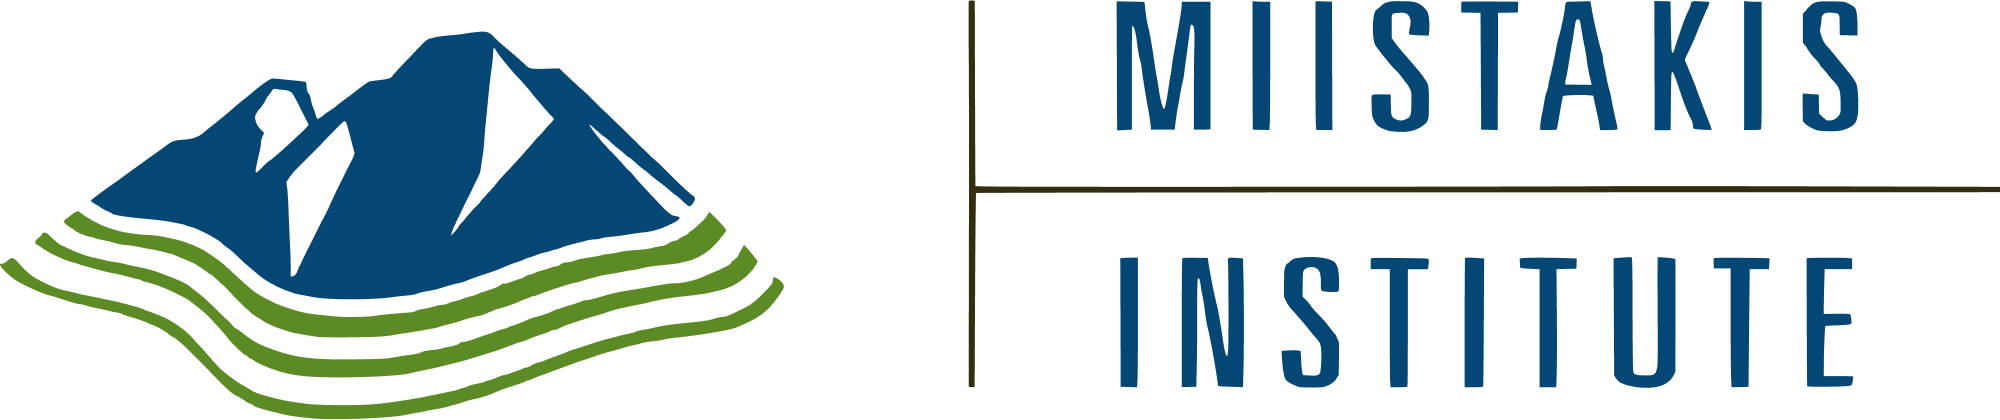 Miistakis Institute logo on transparent background